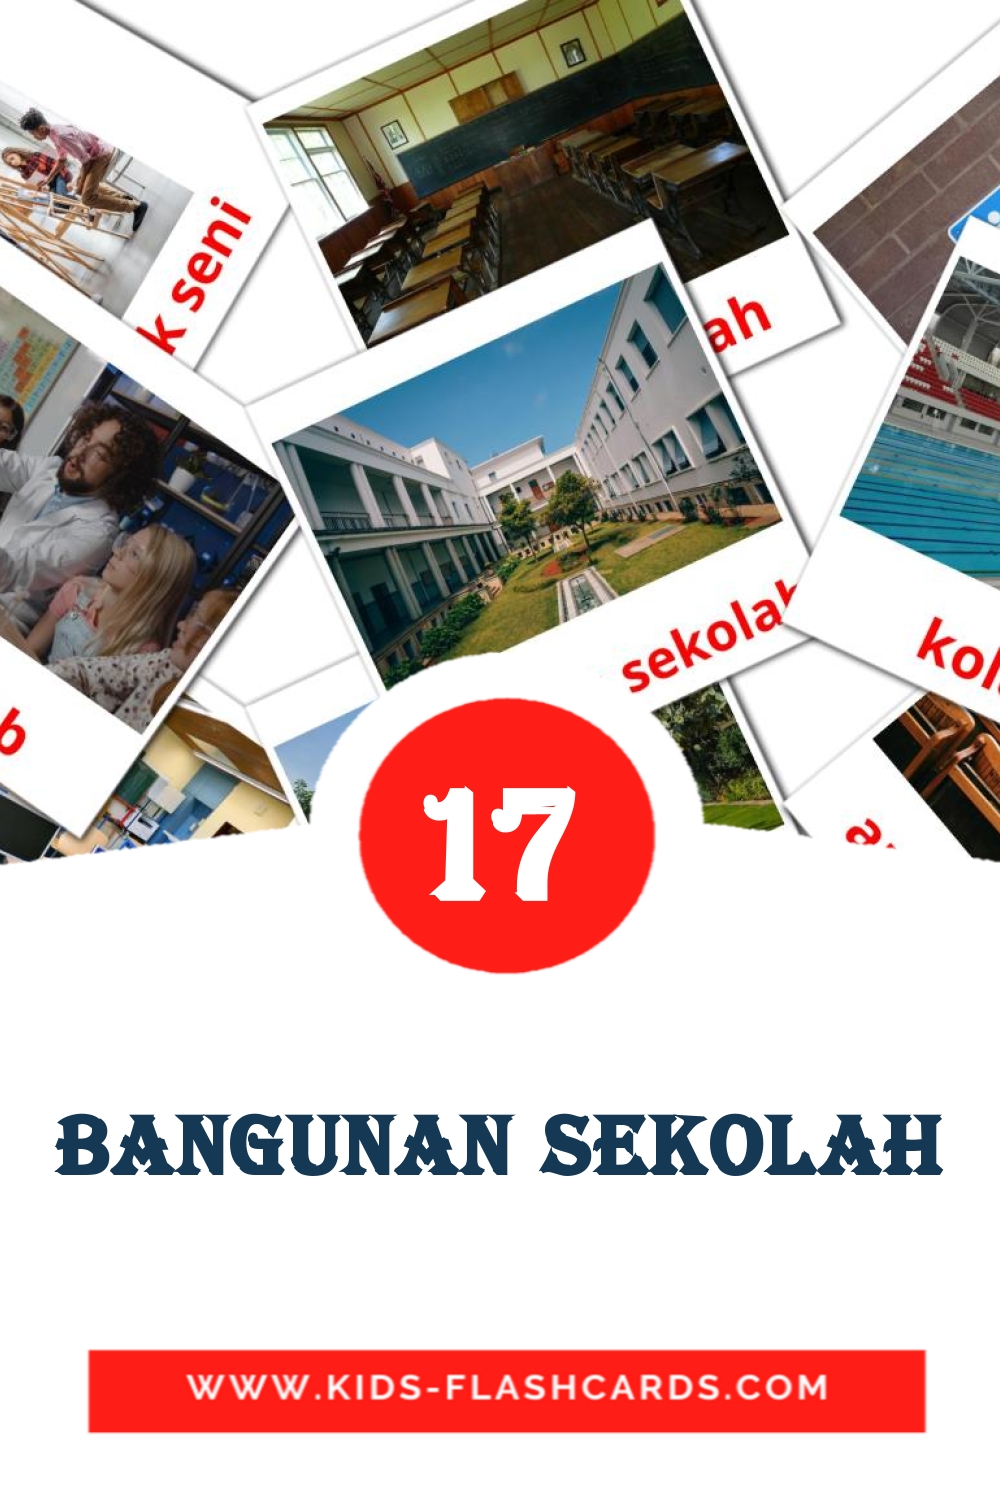 17 Bangunan Sekolah Bildkarten für den Kindergarten auf Malaiisch